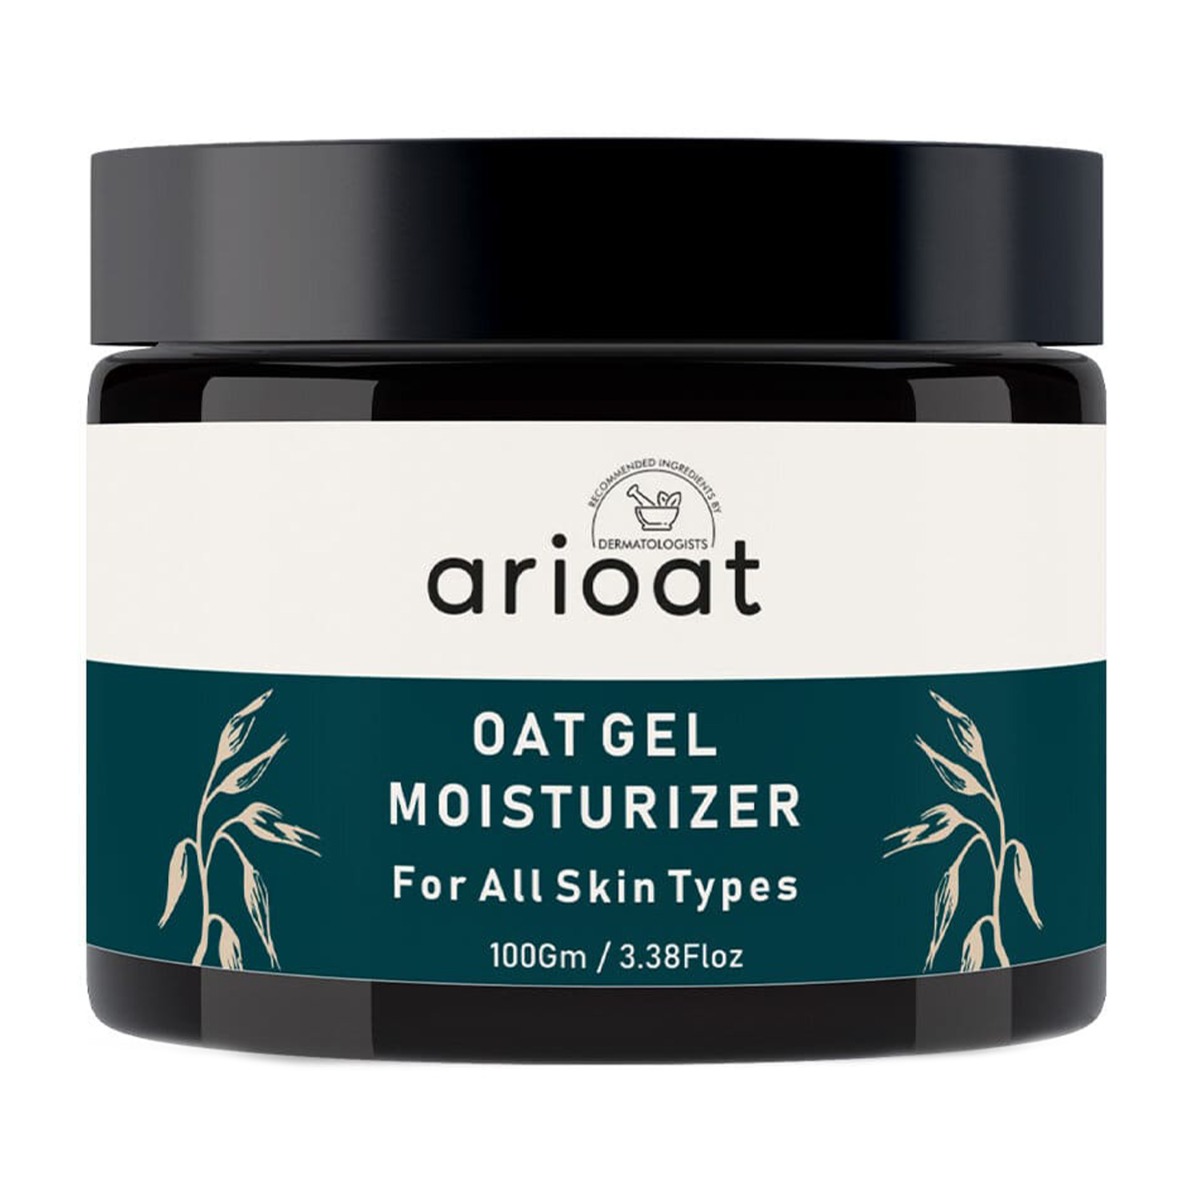 Arioat Oat Gel Moisturizer - For Dry & Sensitive Skin, 100gm